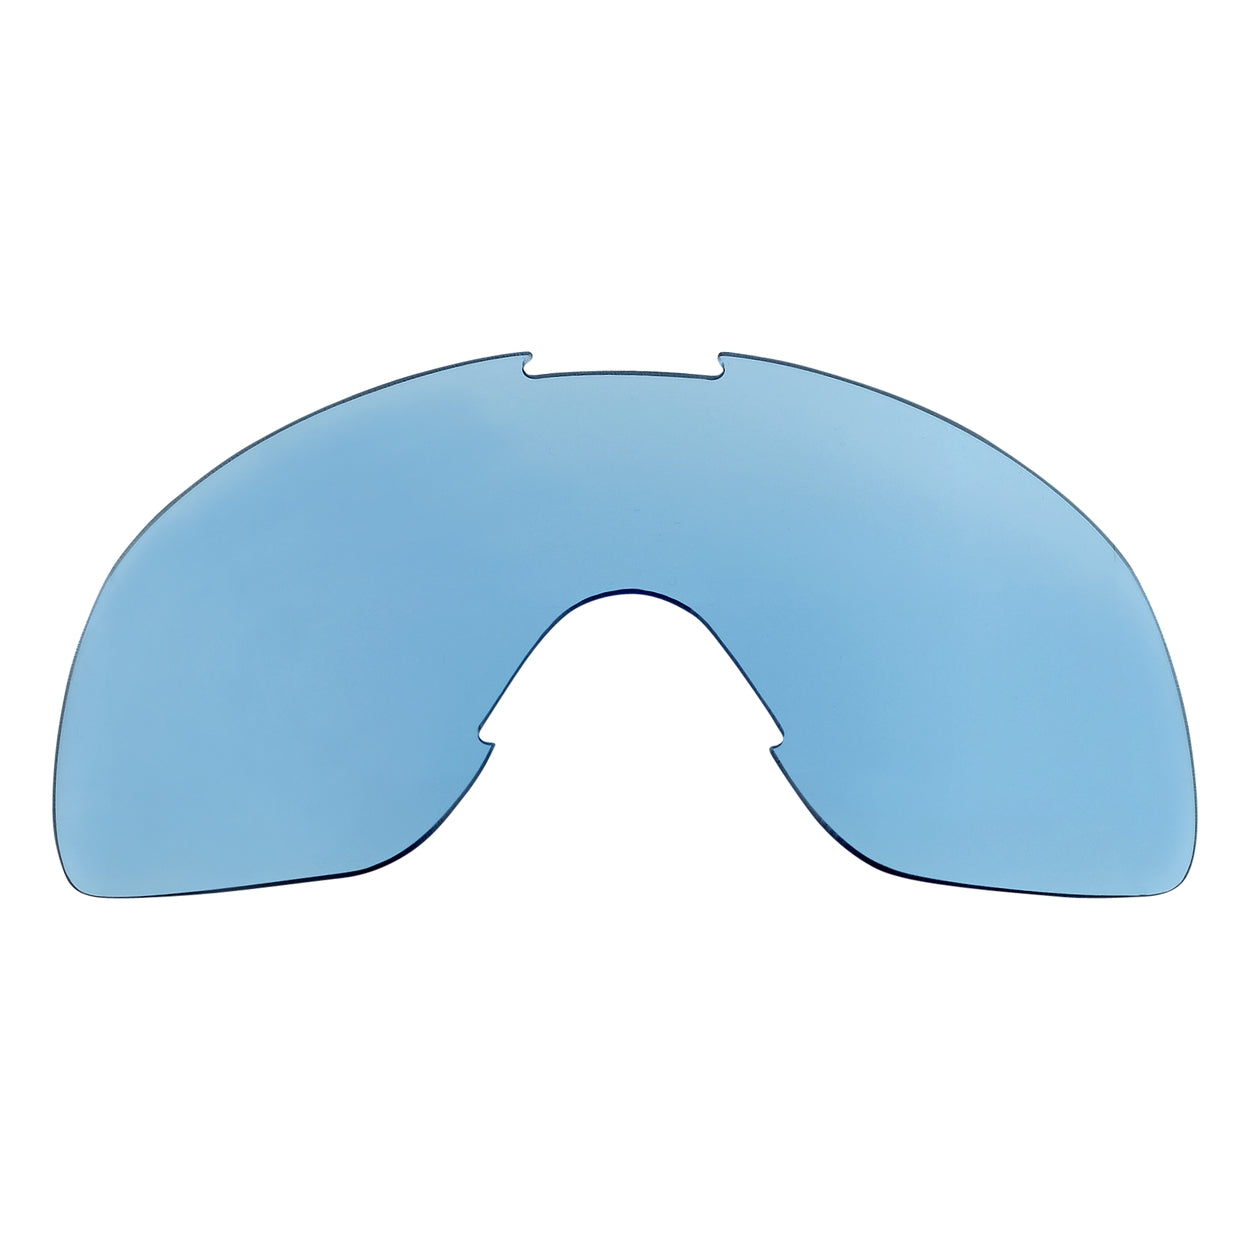 Overland 2.0 Goggle Lens - Blue